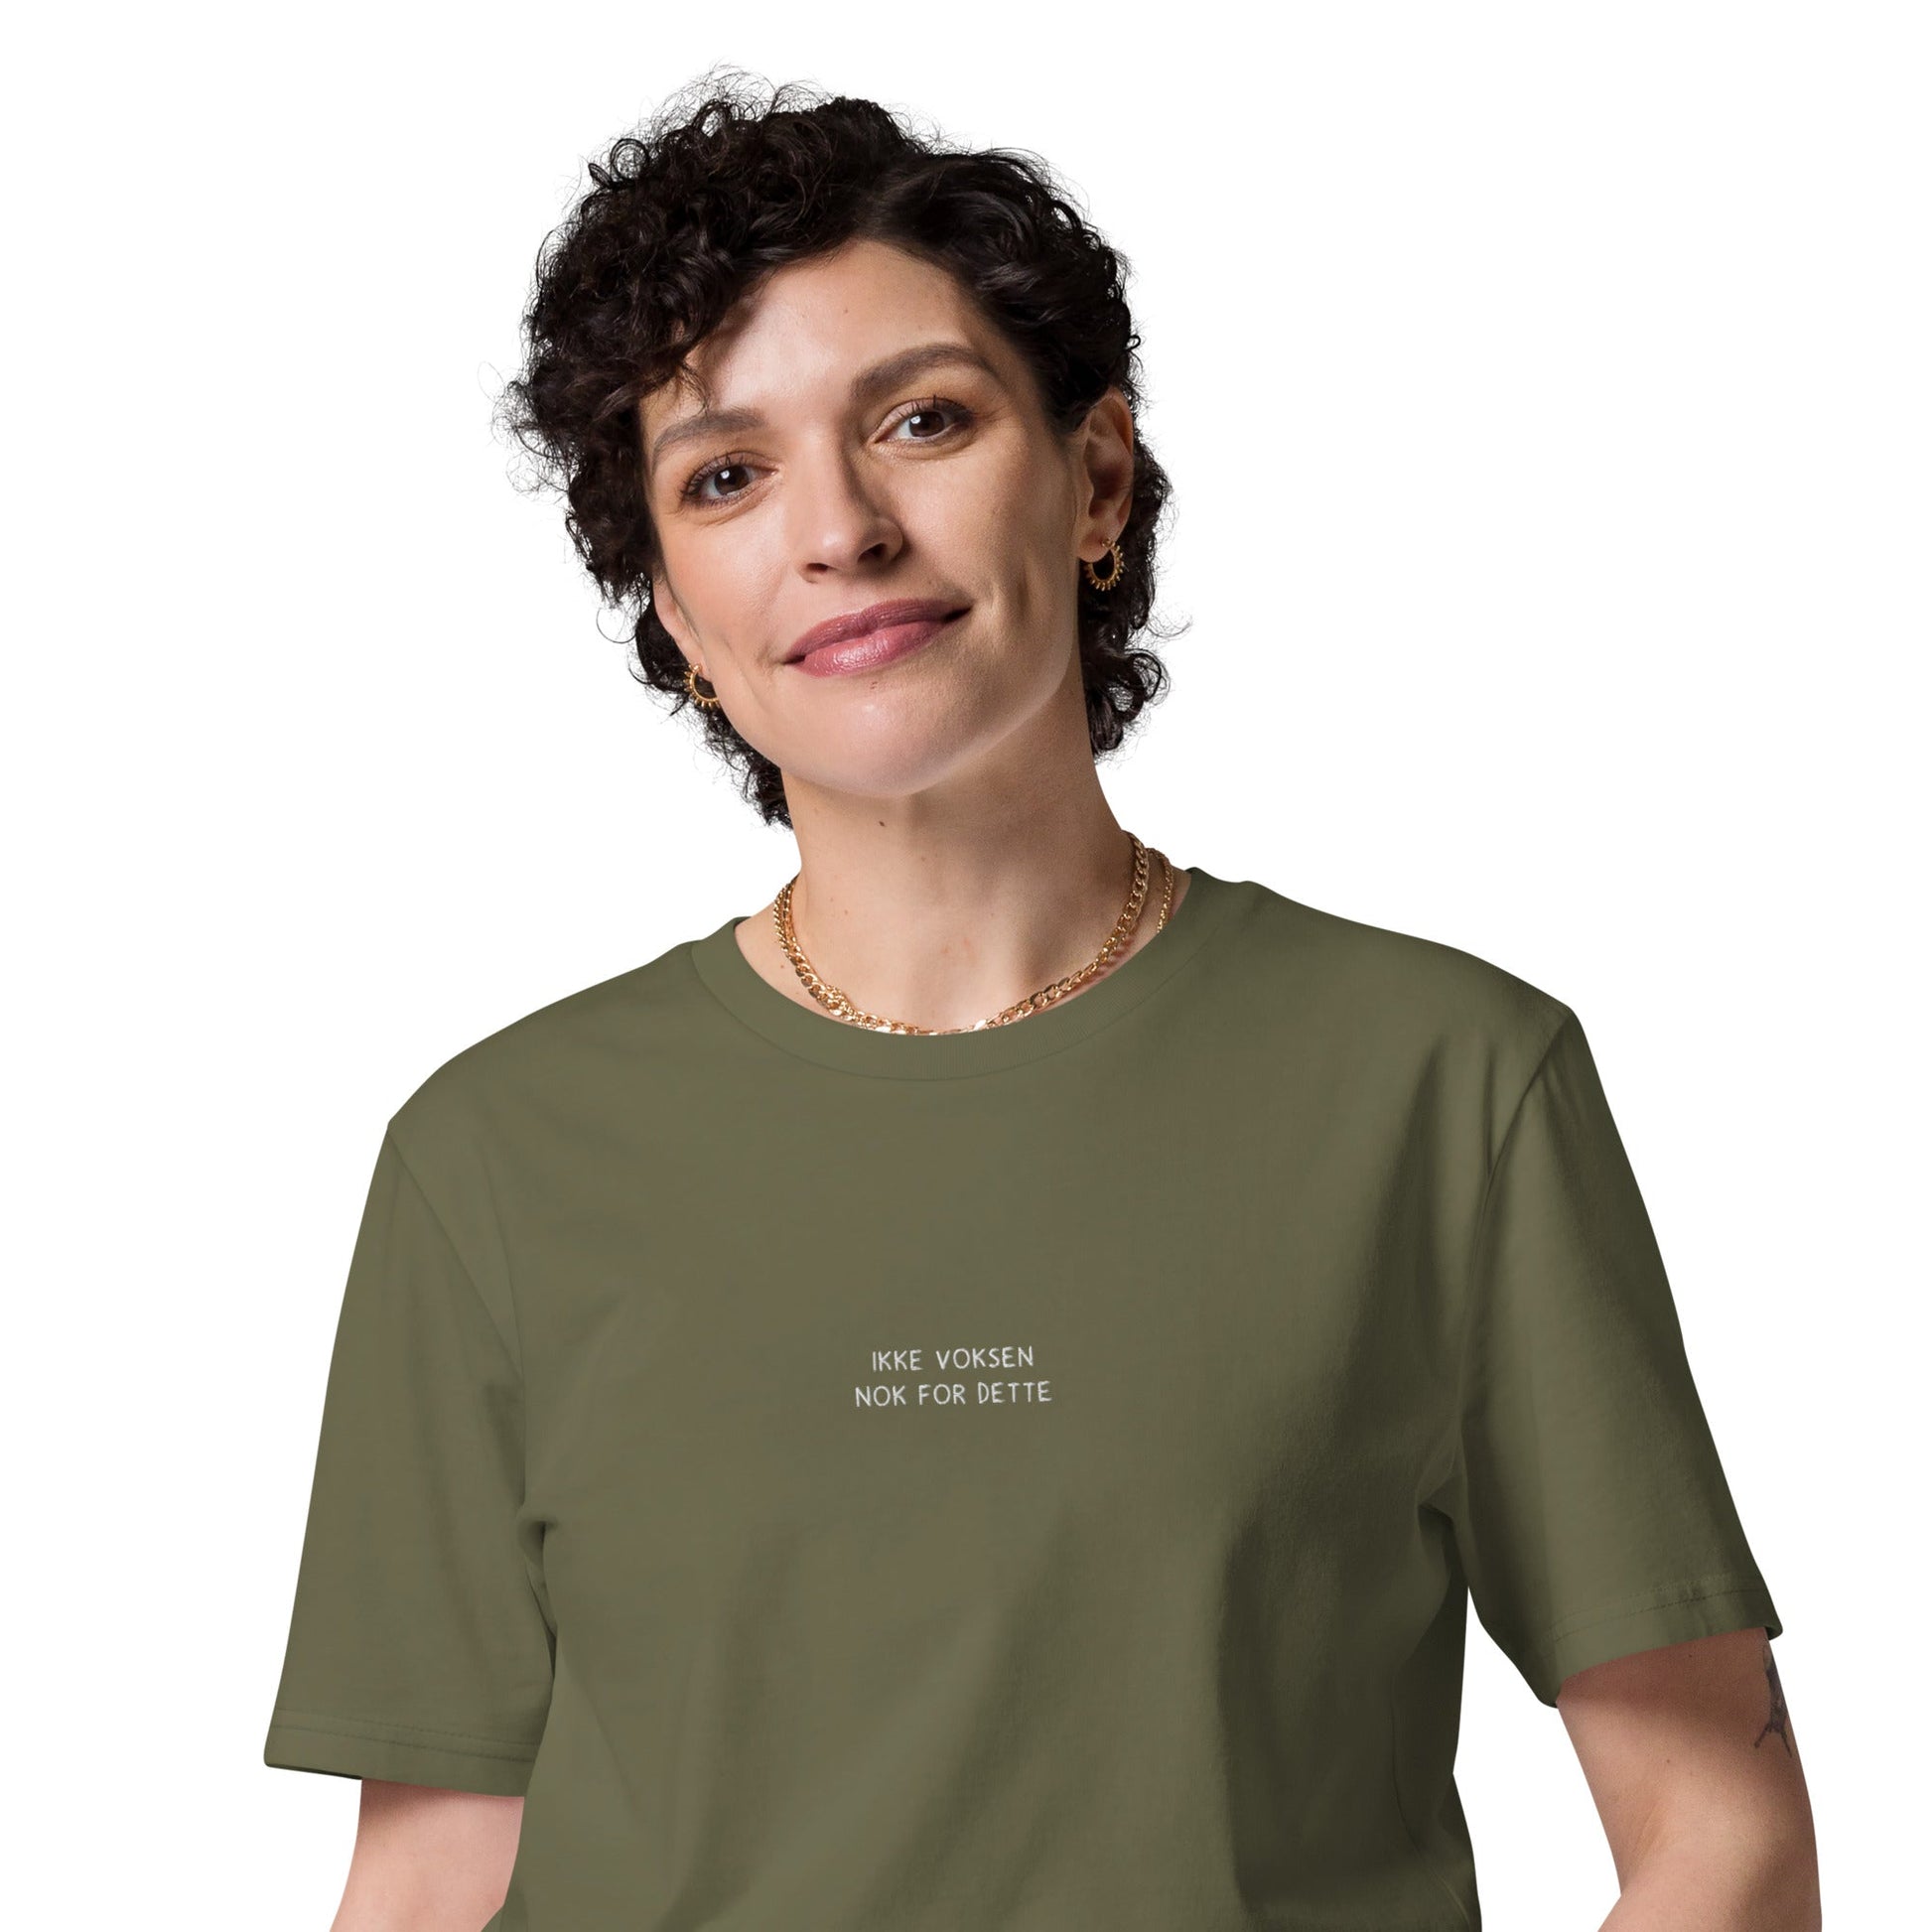 VAGPWR Ikke voksen nok - Unisex organic cotton t-shirt